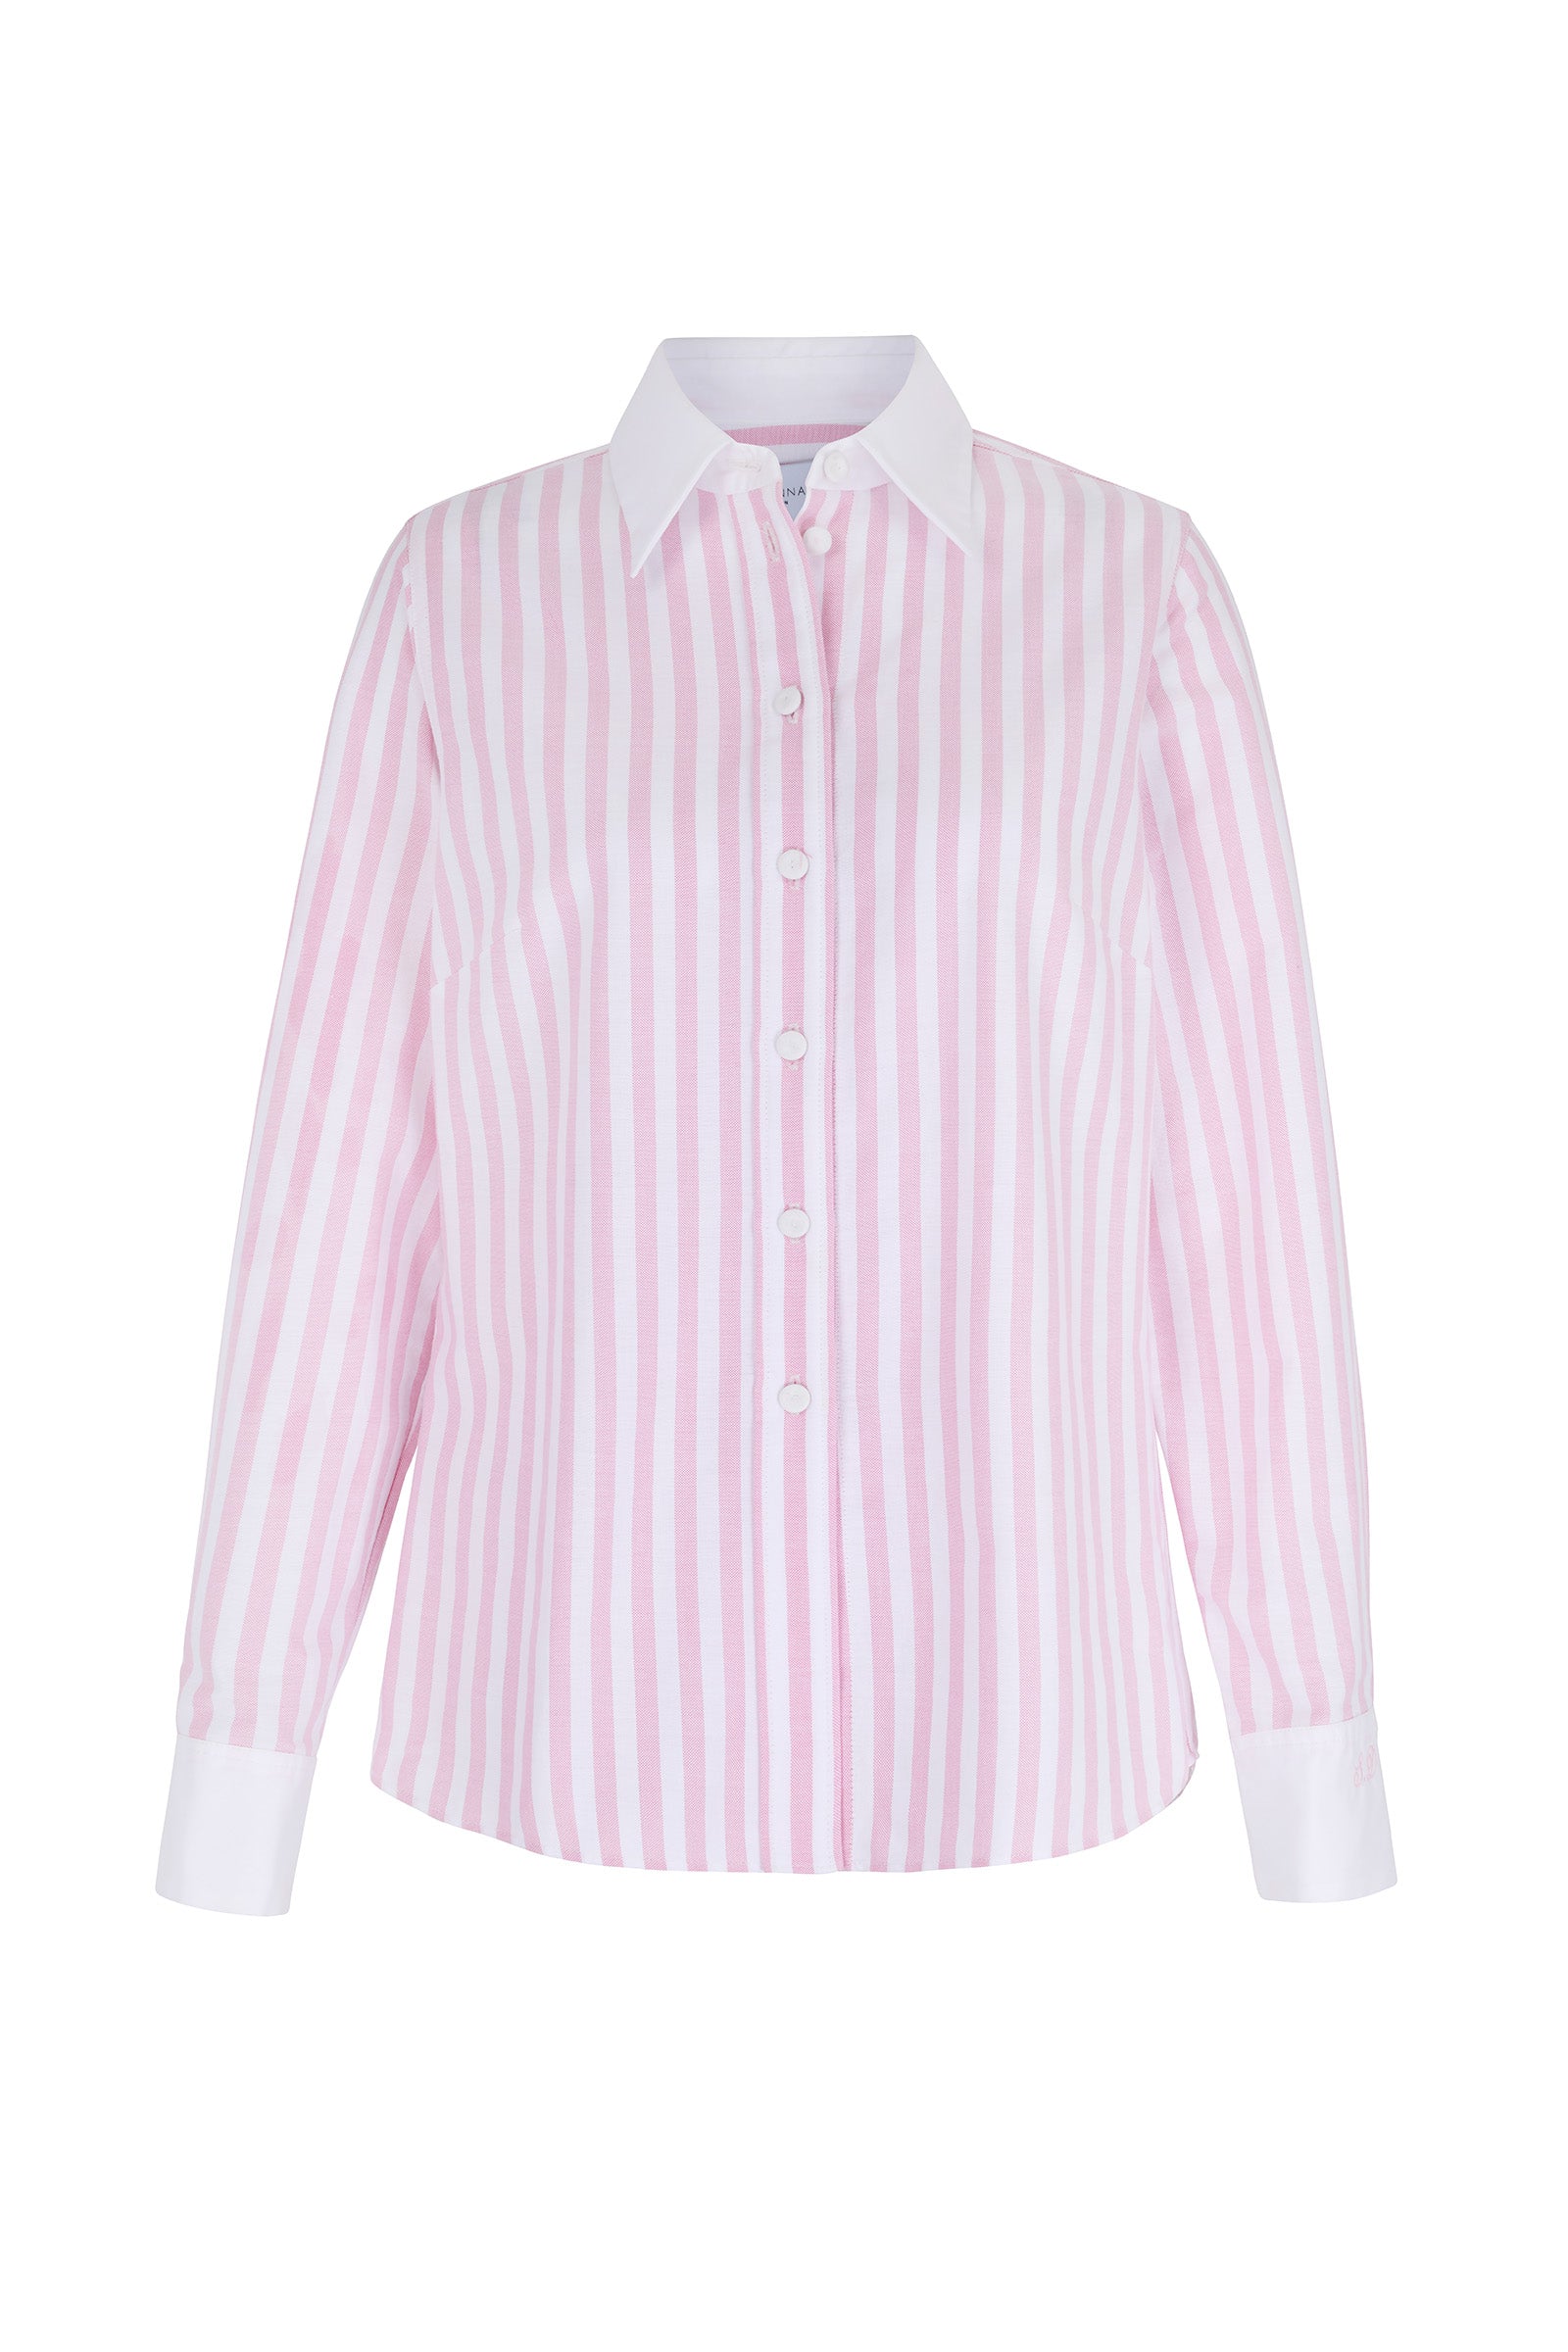 Marylebone Striped Cotton Shirt